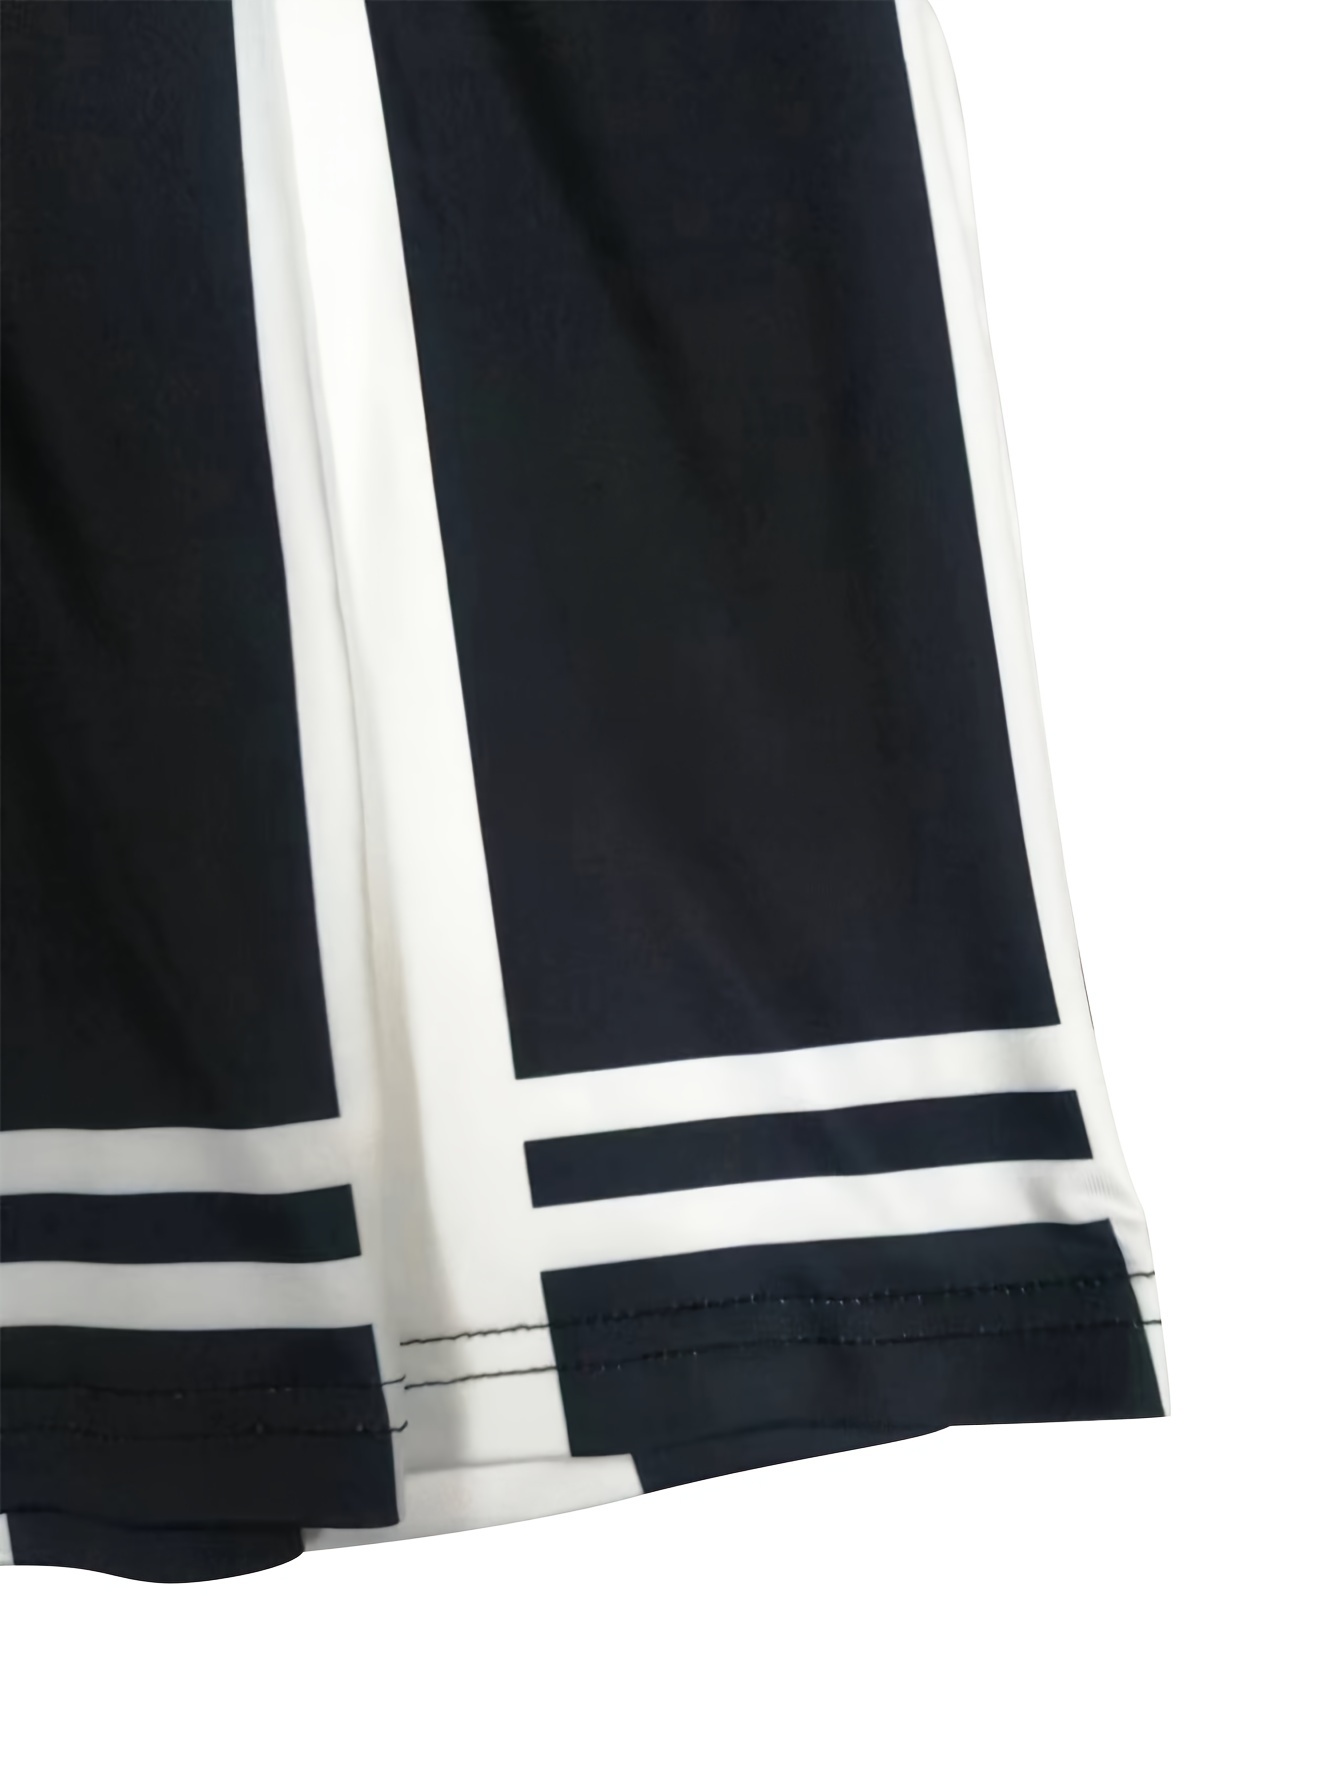 3 piece Cheer Uniforms - Sleeveless top, Skirt, and Under Shorts